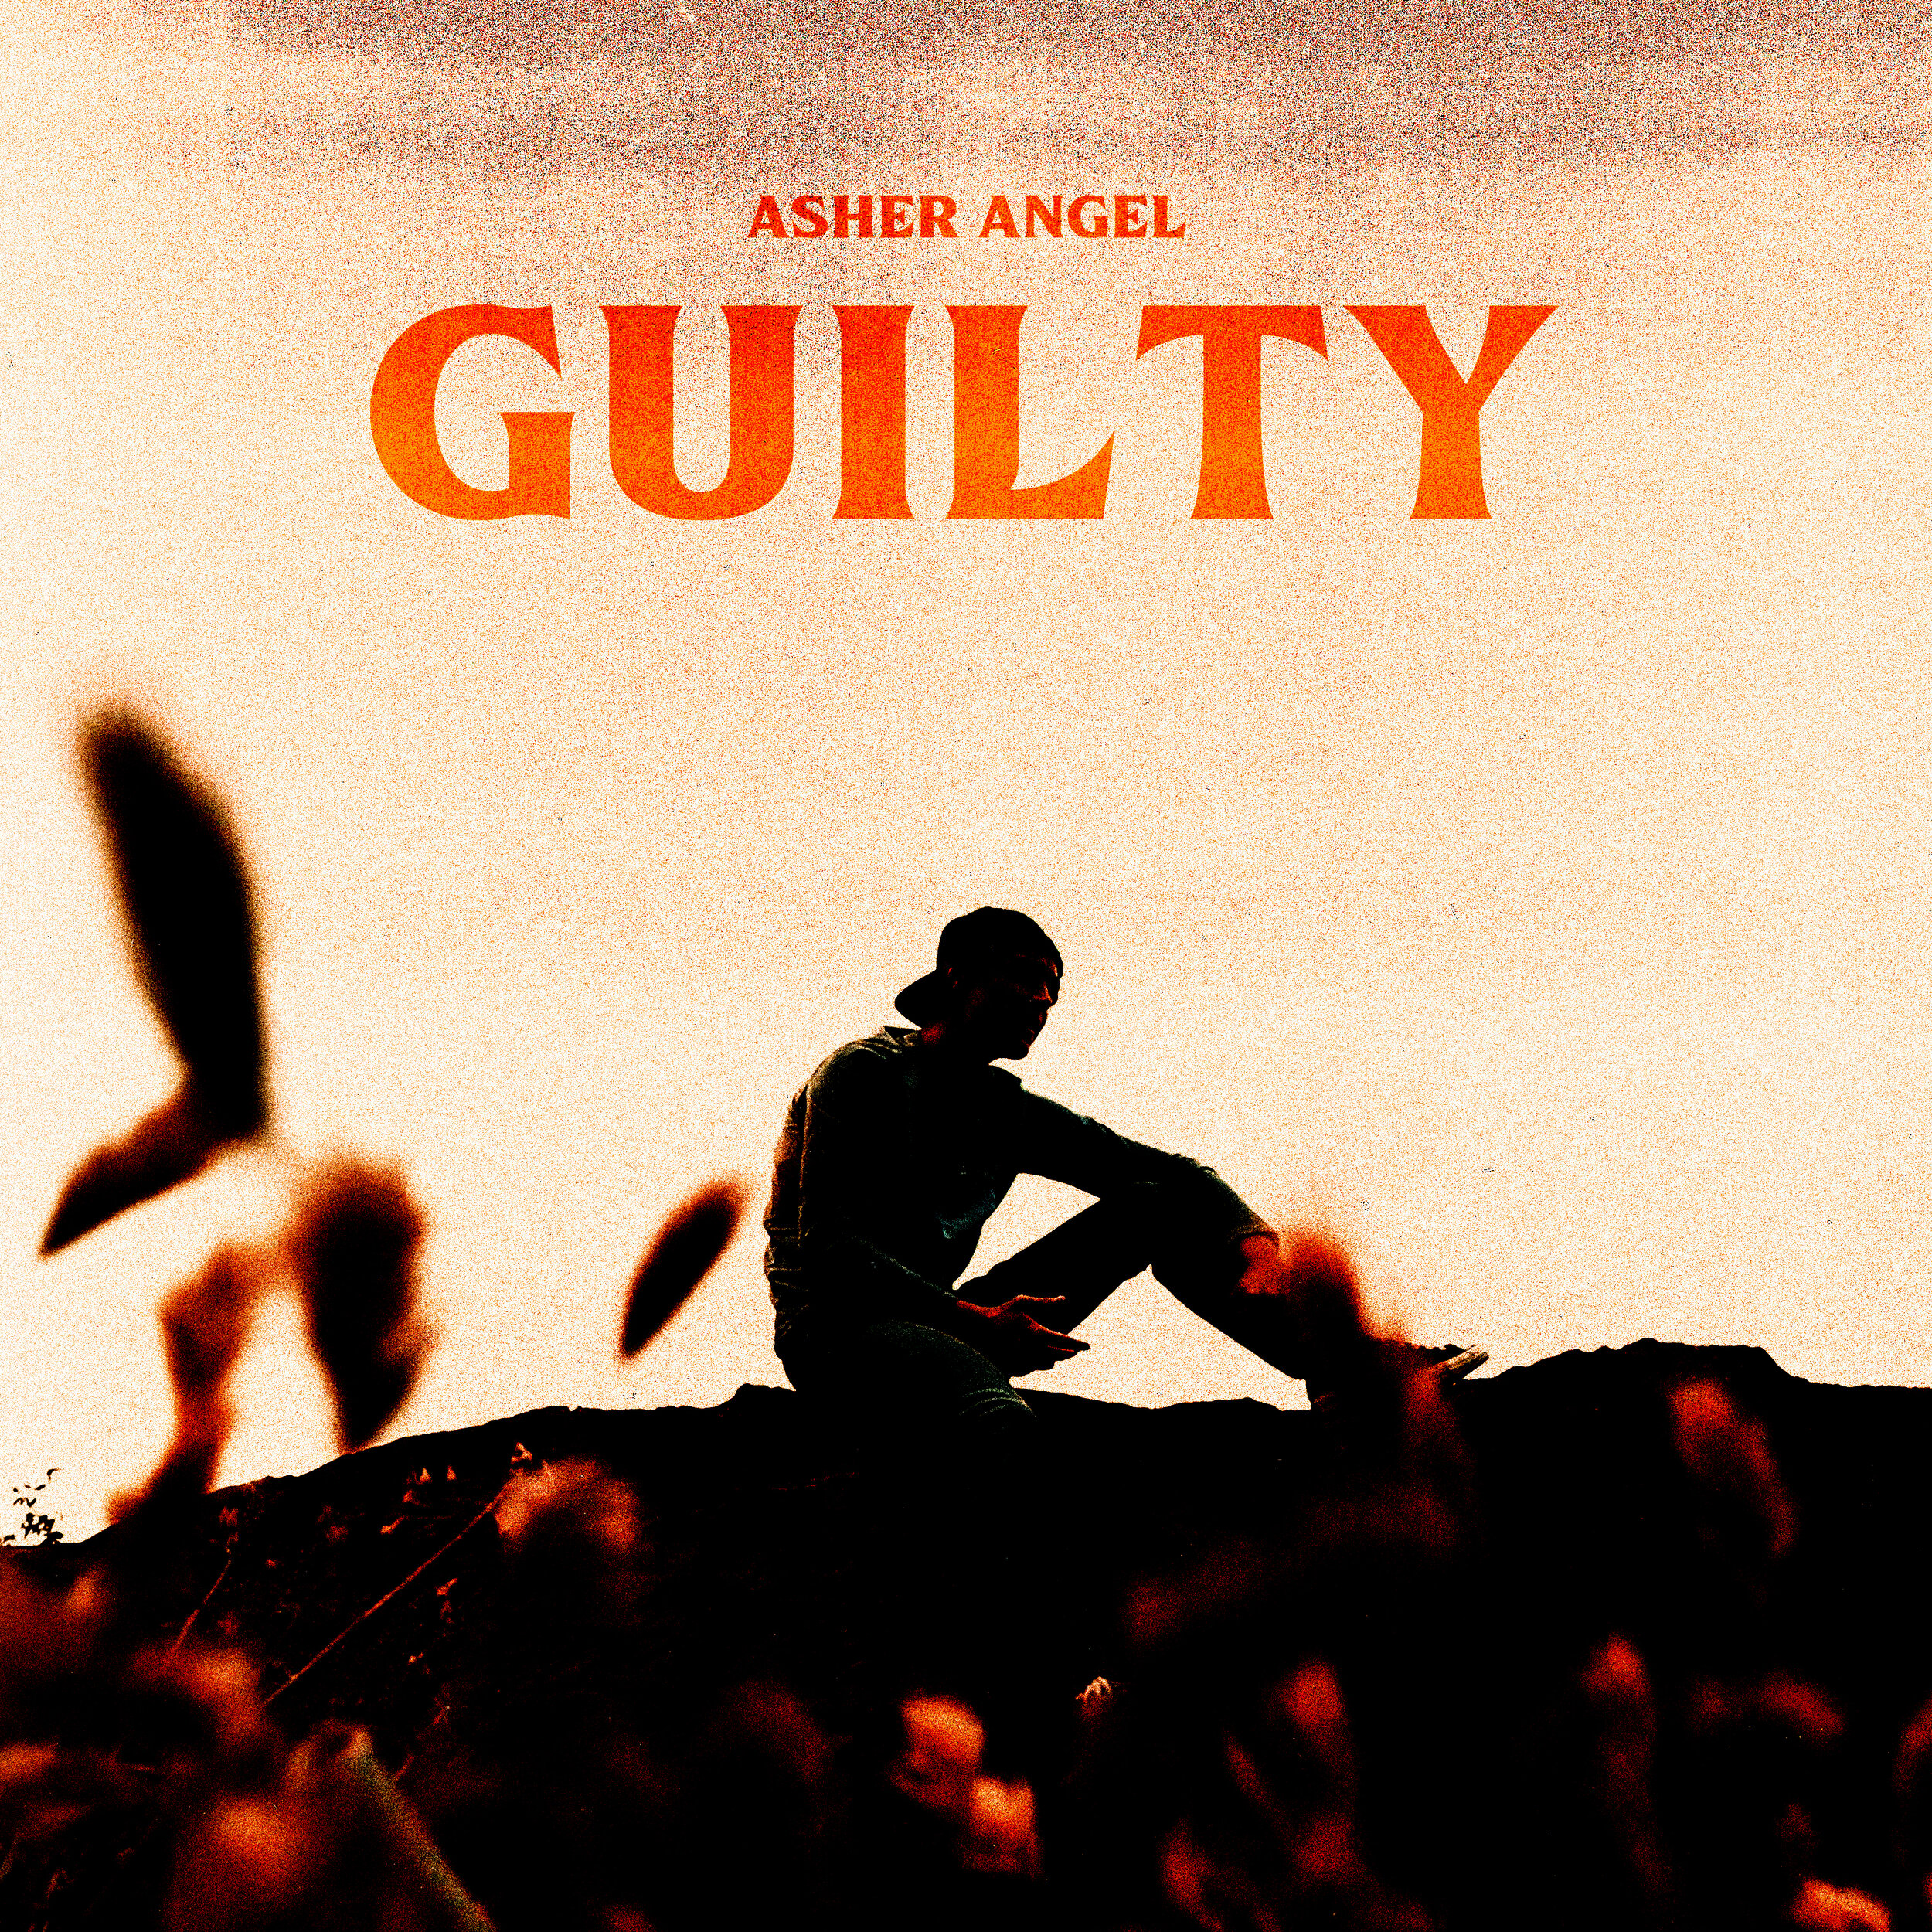 Asher Angel - Guilty - Single Artwork Design